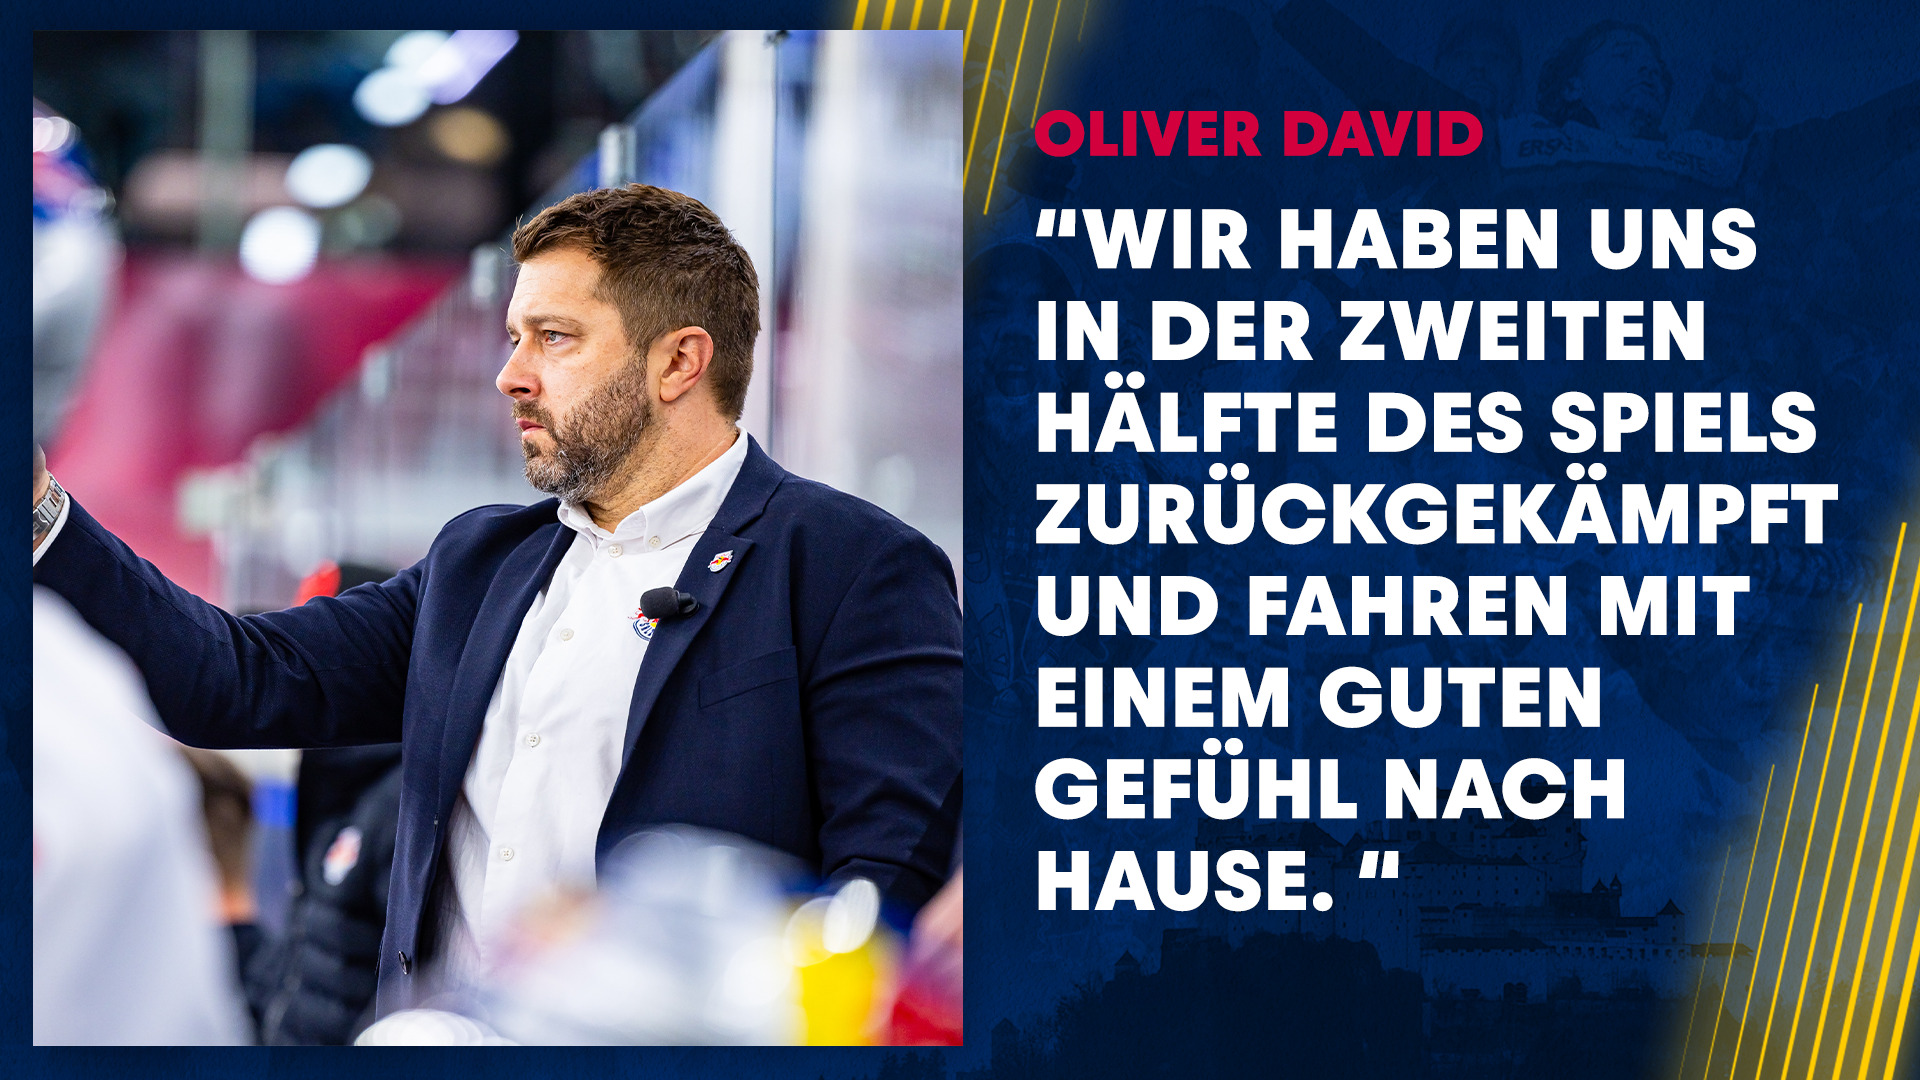 Statement: Oliver David